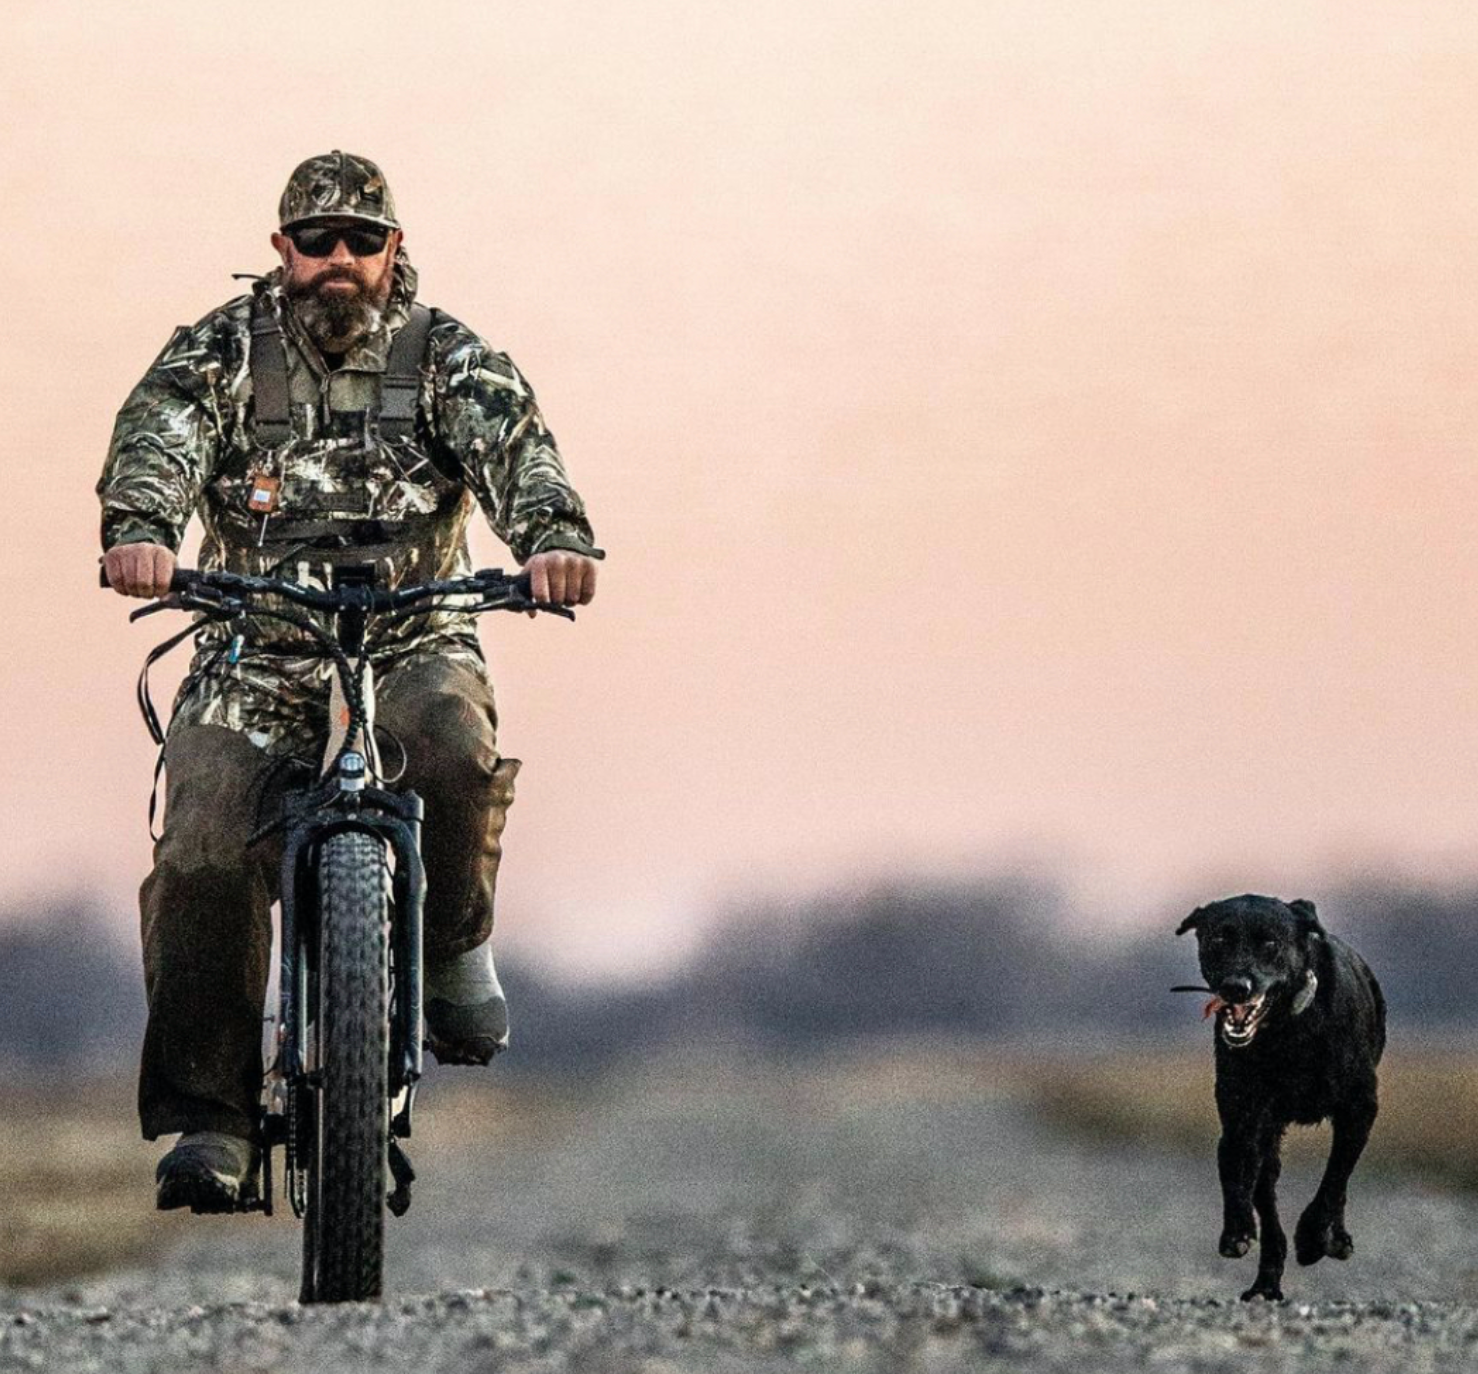 hunting on bike with dog